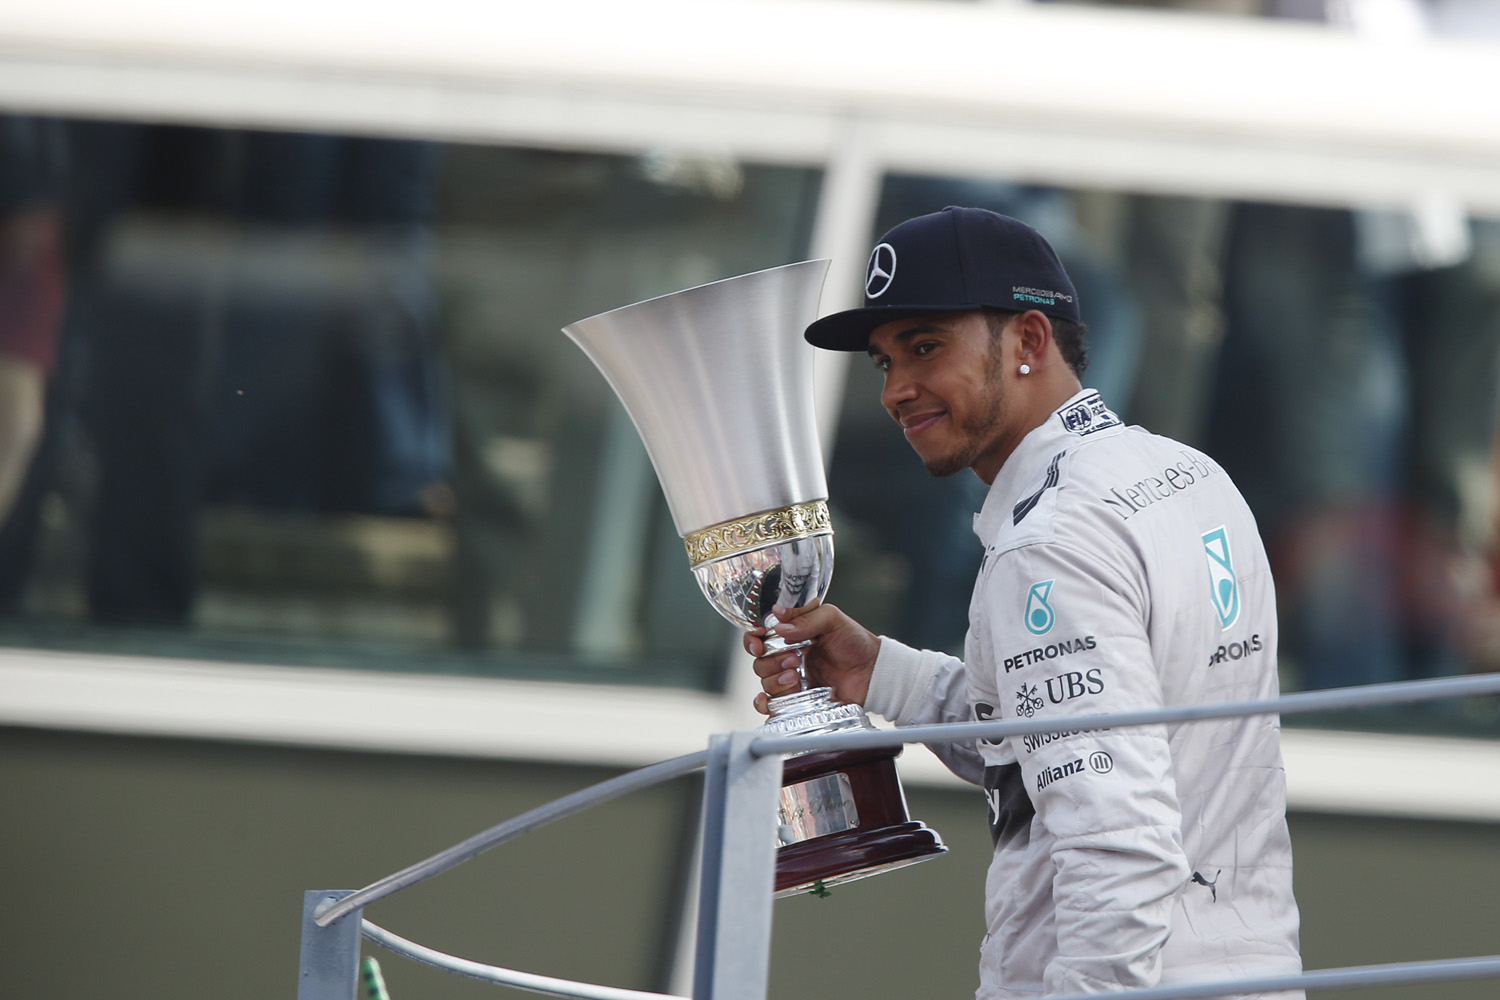 Formula 1 - GP Italy 2014, Winner Lewis Hamilton